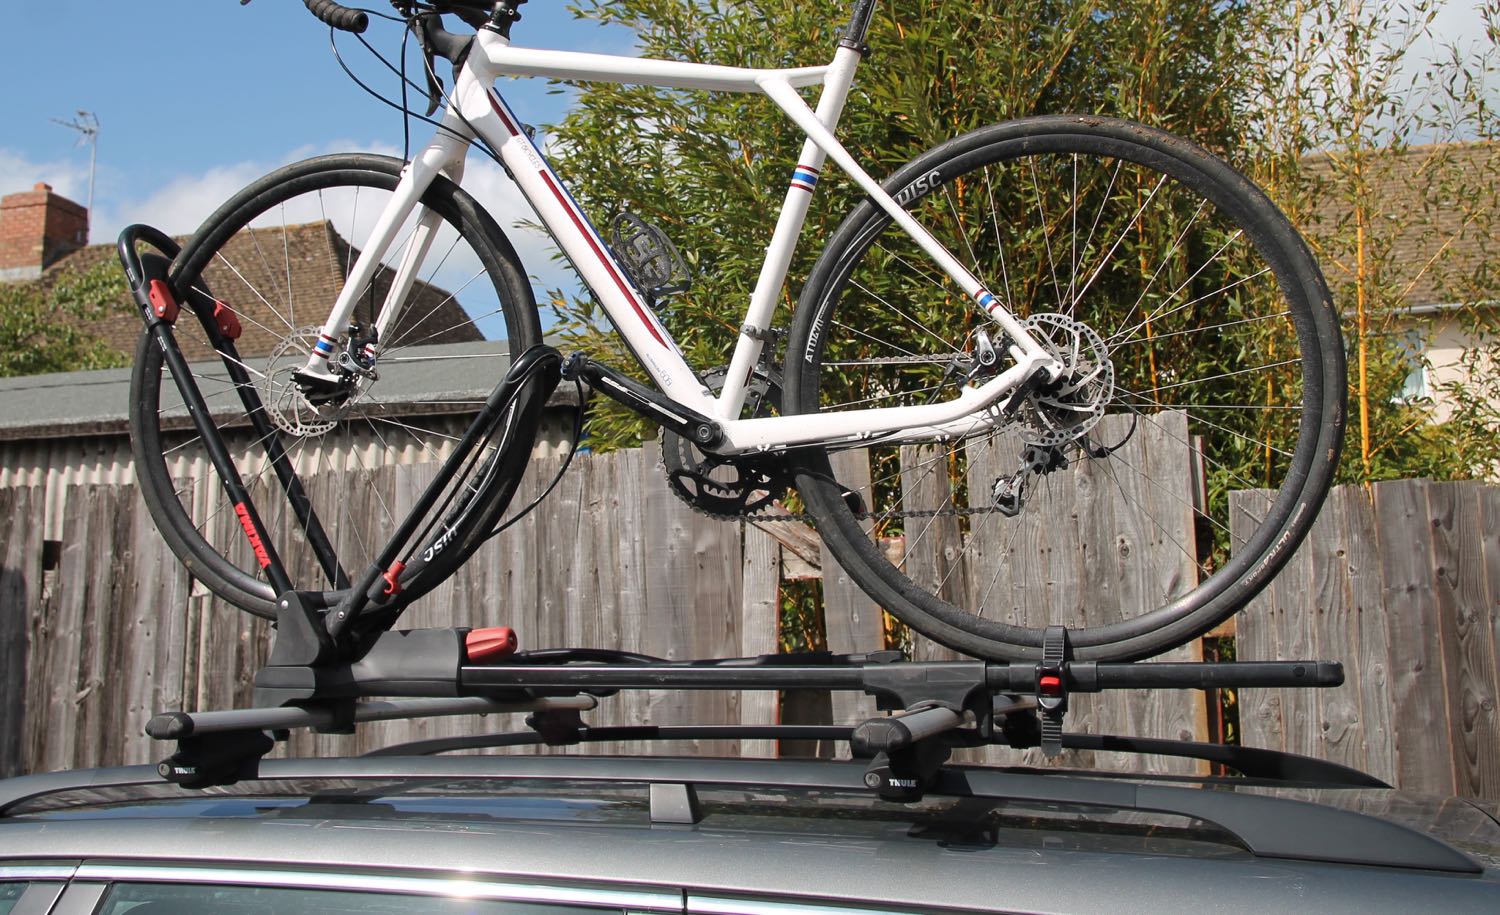 yakima frontloader 1 bike roof rack